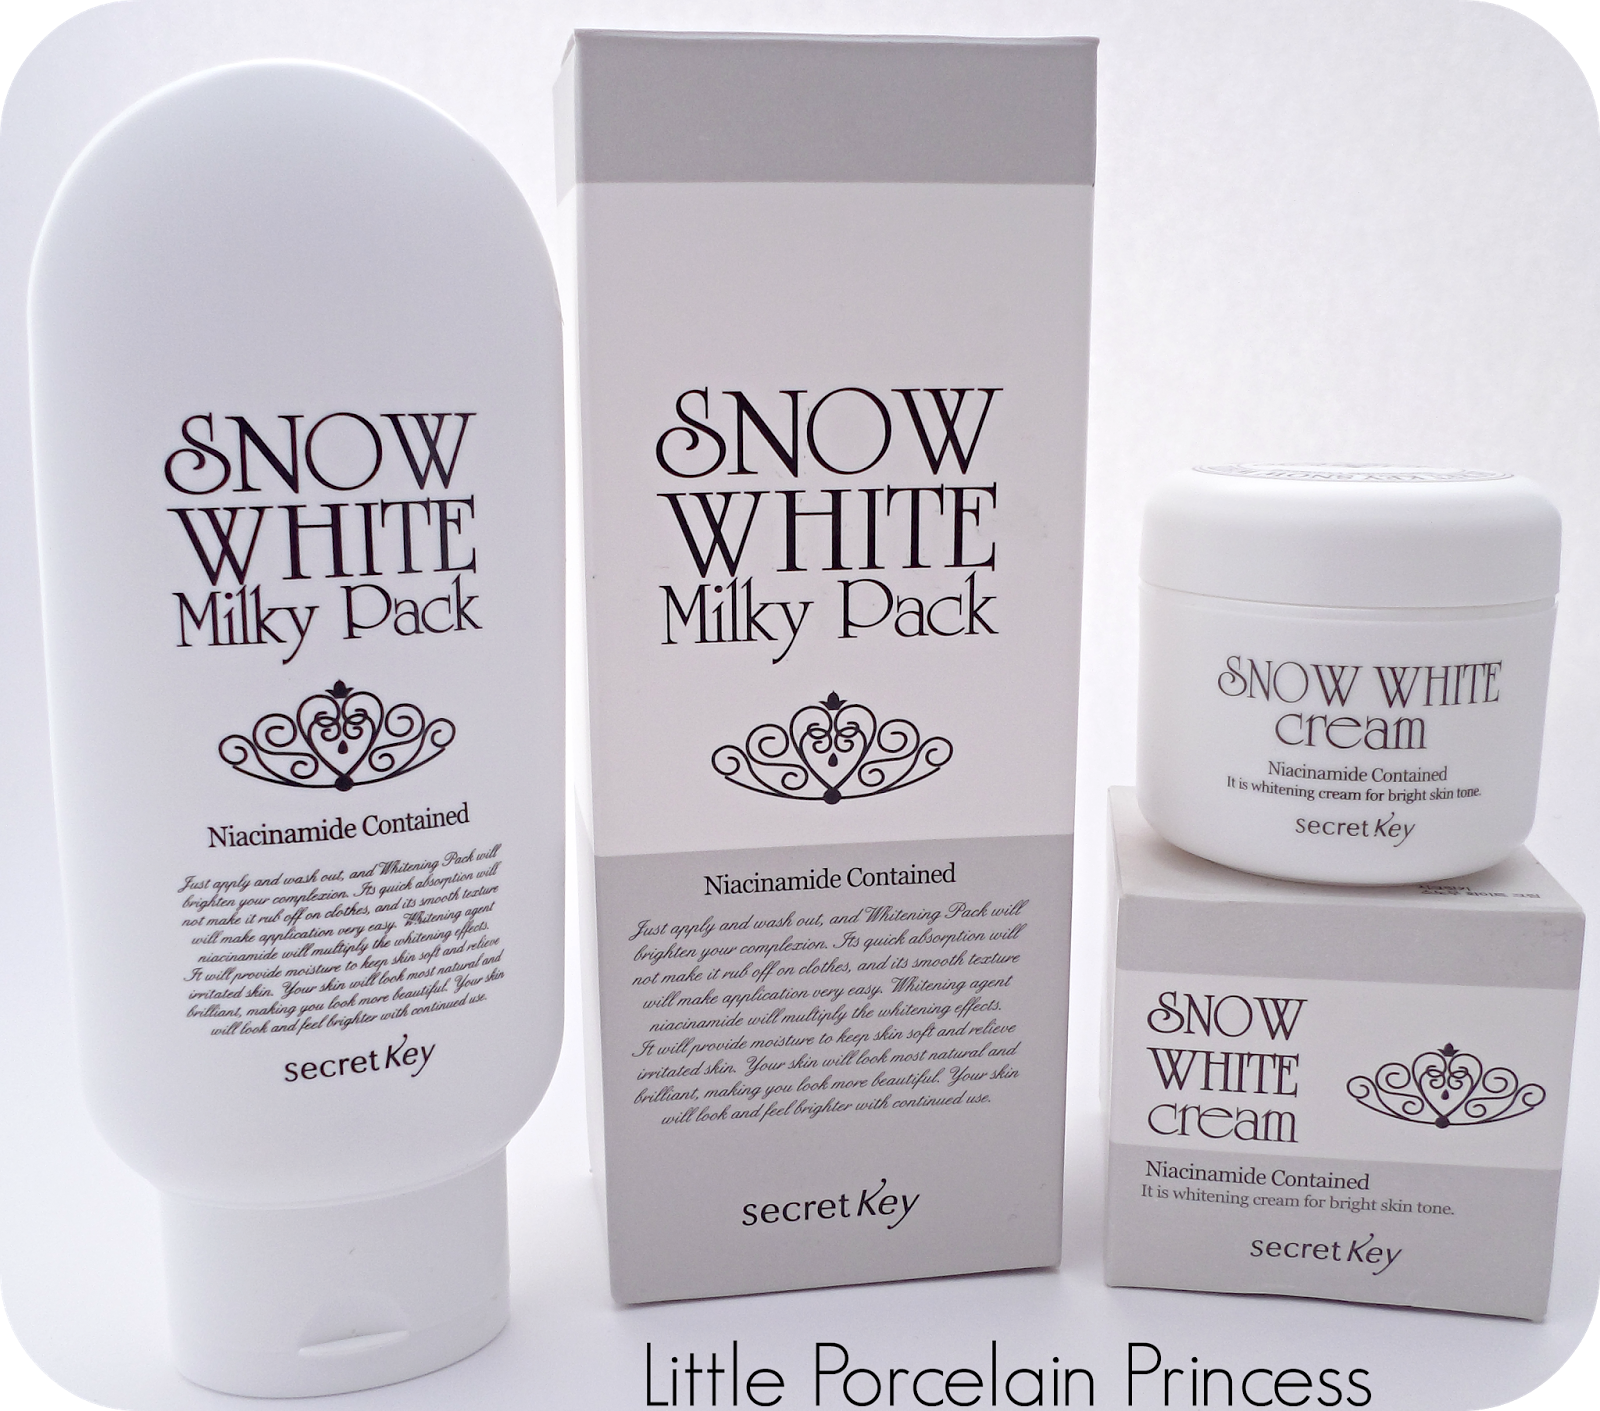 Snow secret. Secret Key White Milky Pack Cream. Snow White Milky Pack Secret Key. Snow White Milky Pack крем. Secret Key Snow White Milky Pack, 200гр..